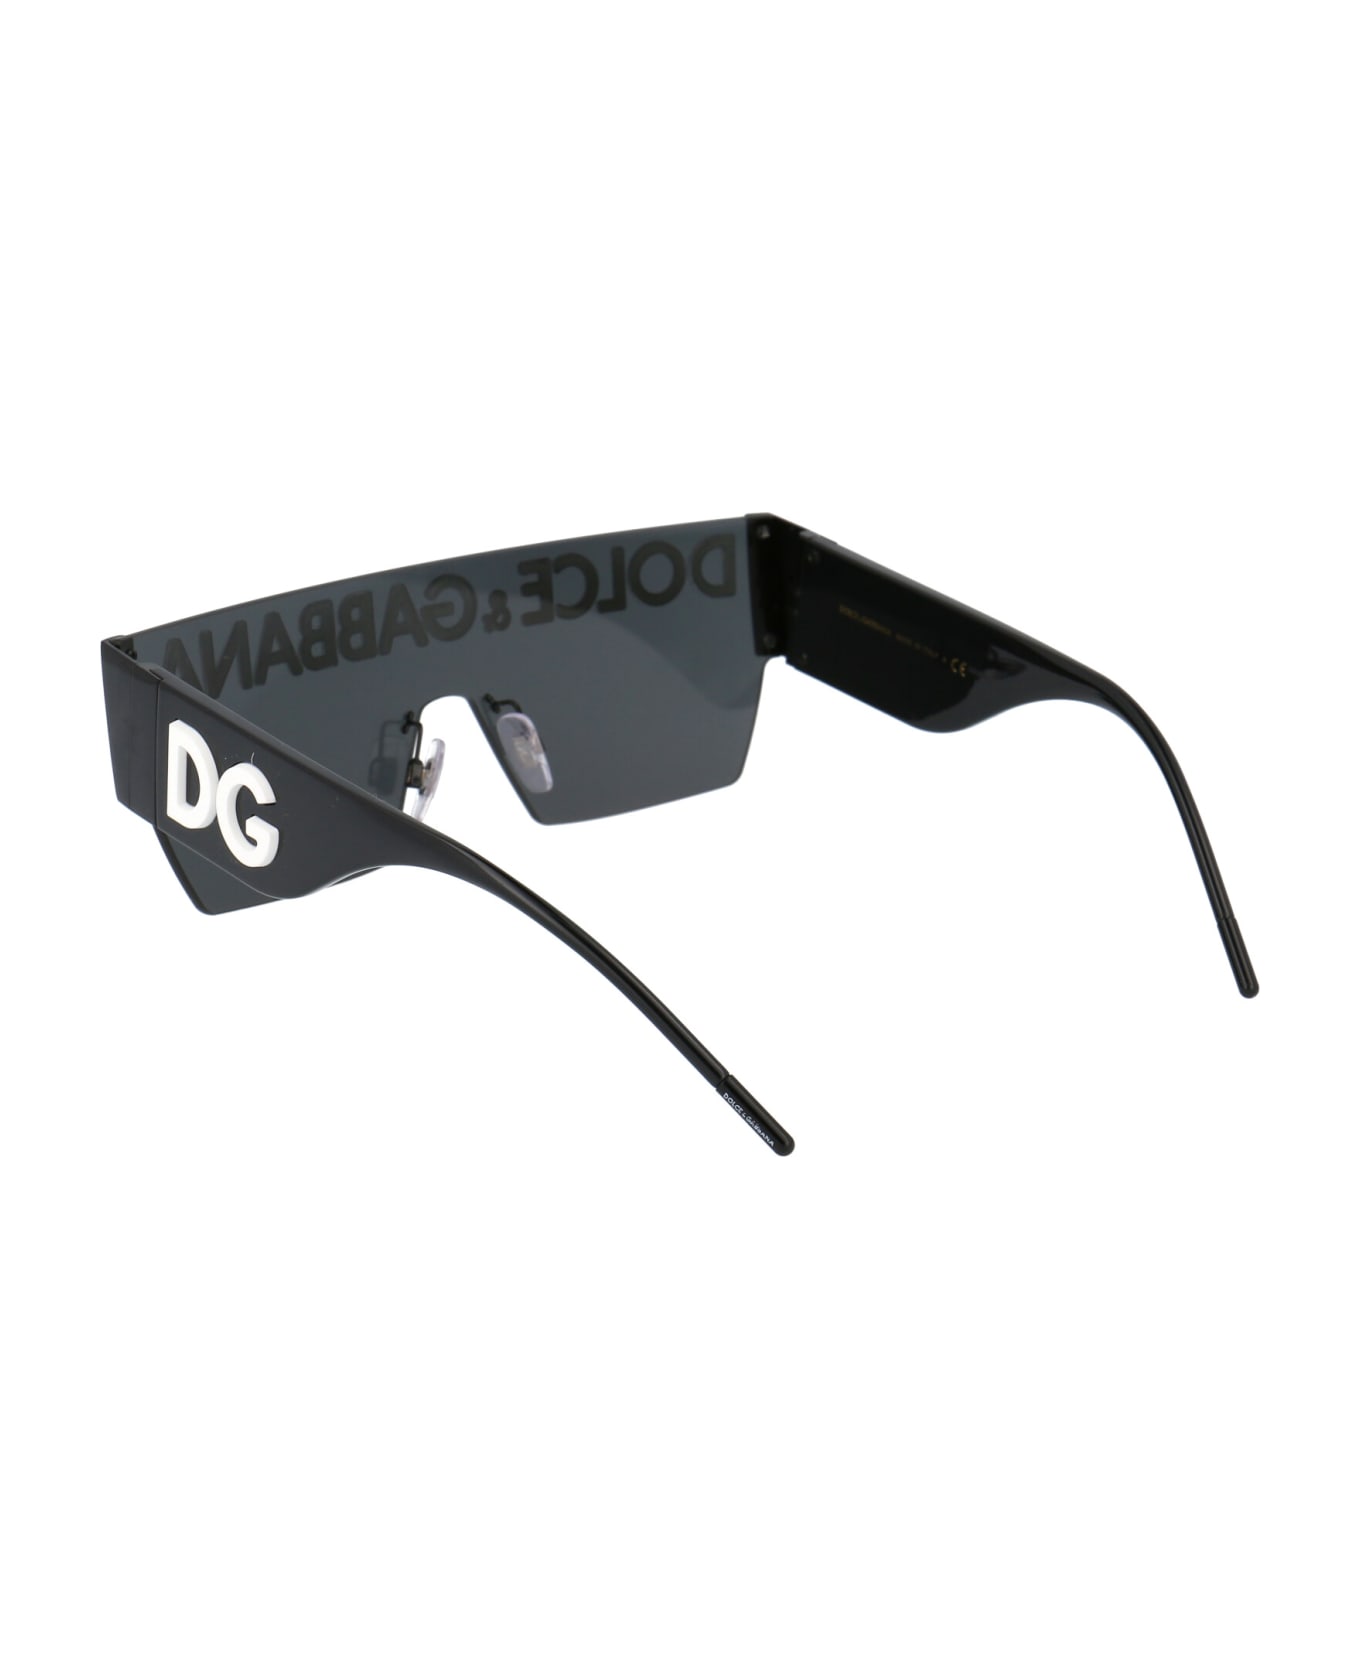 Dolce & Gabbana Eyewear 0dg2233 Sunglasses - 01/87 BLACK サングラス